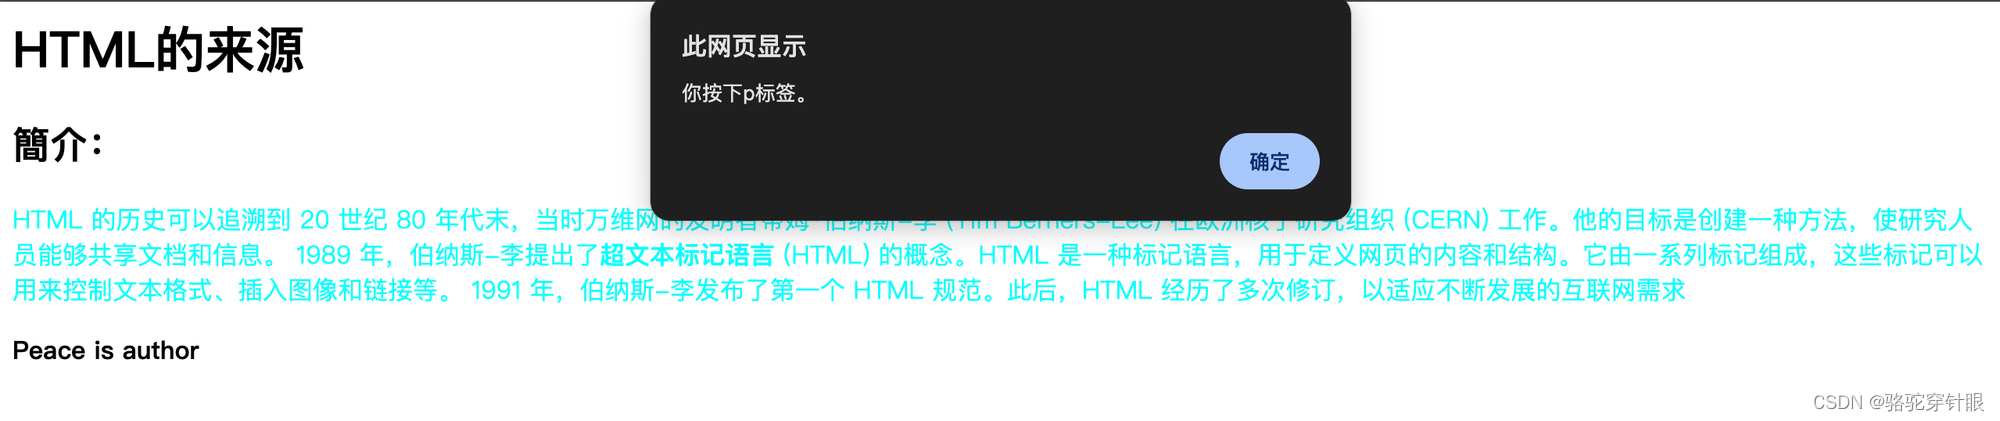 HTML基本元素